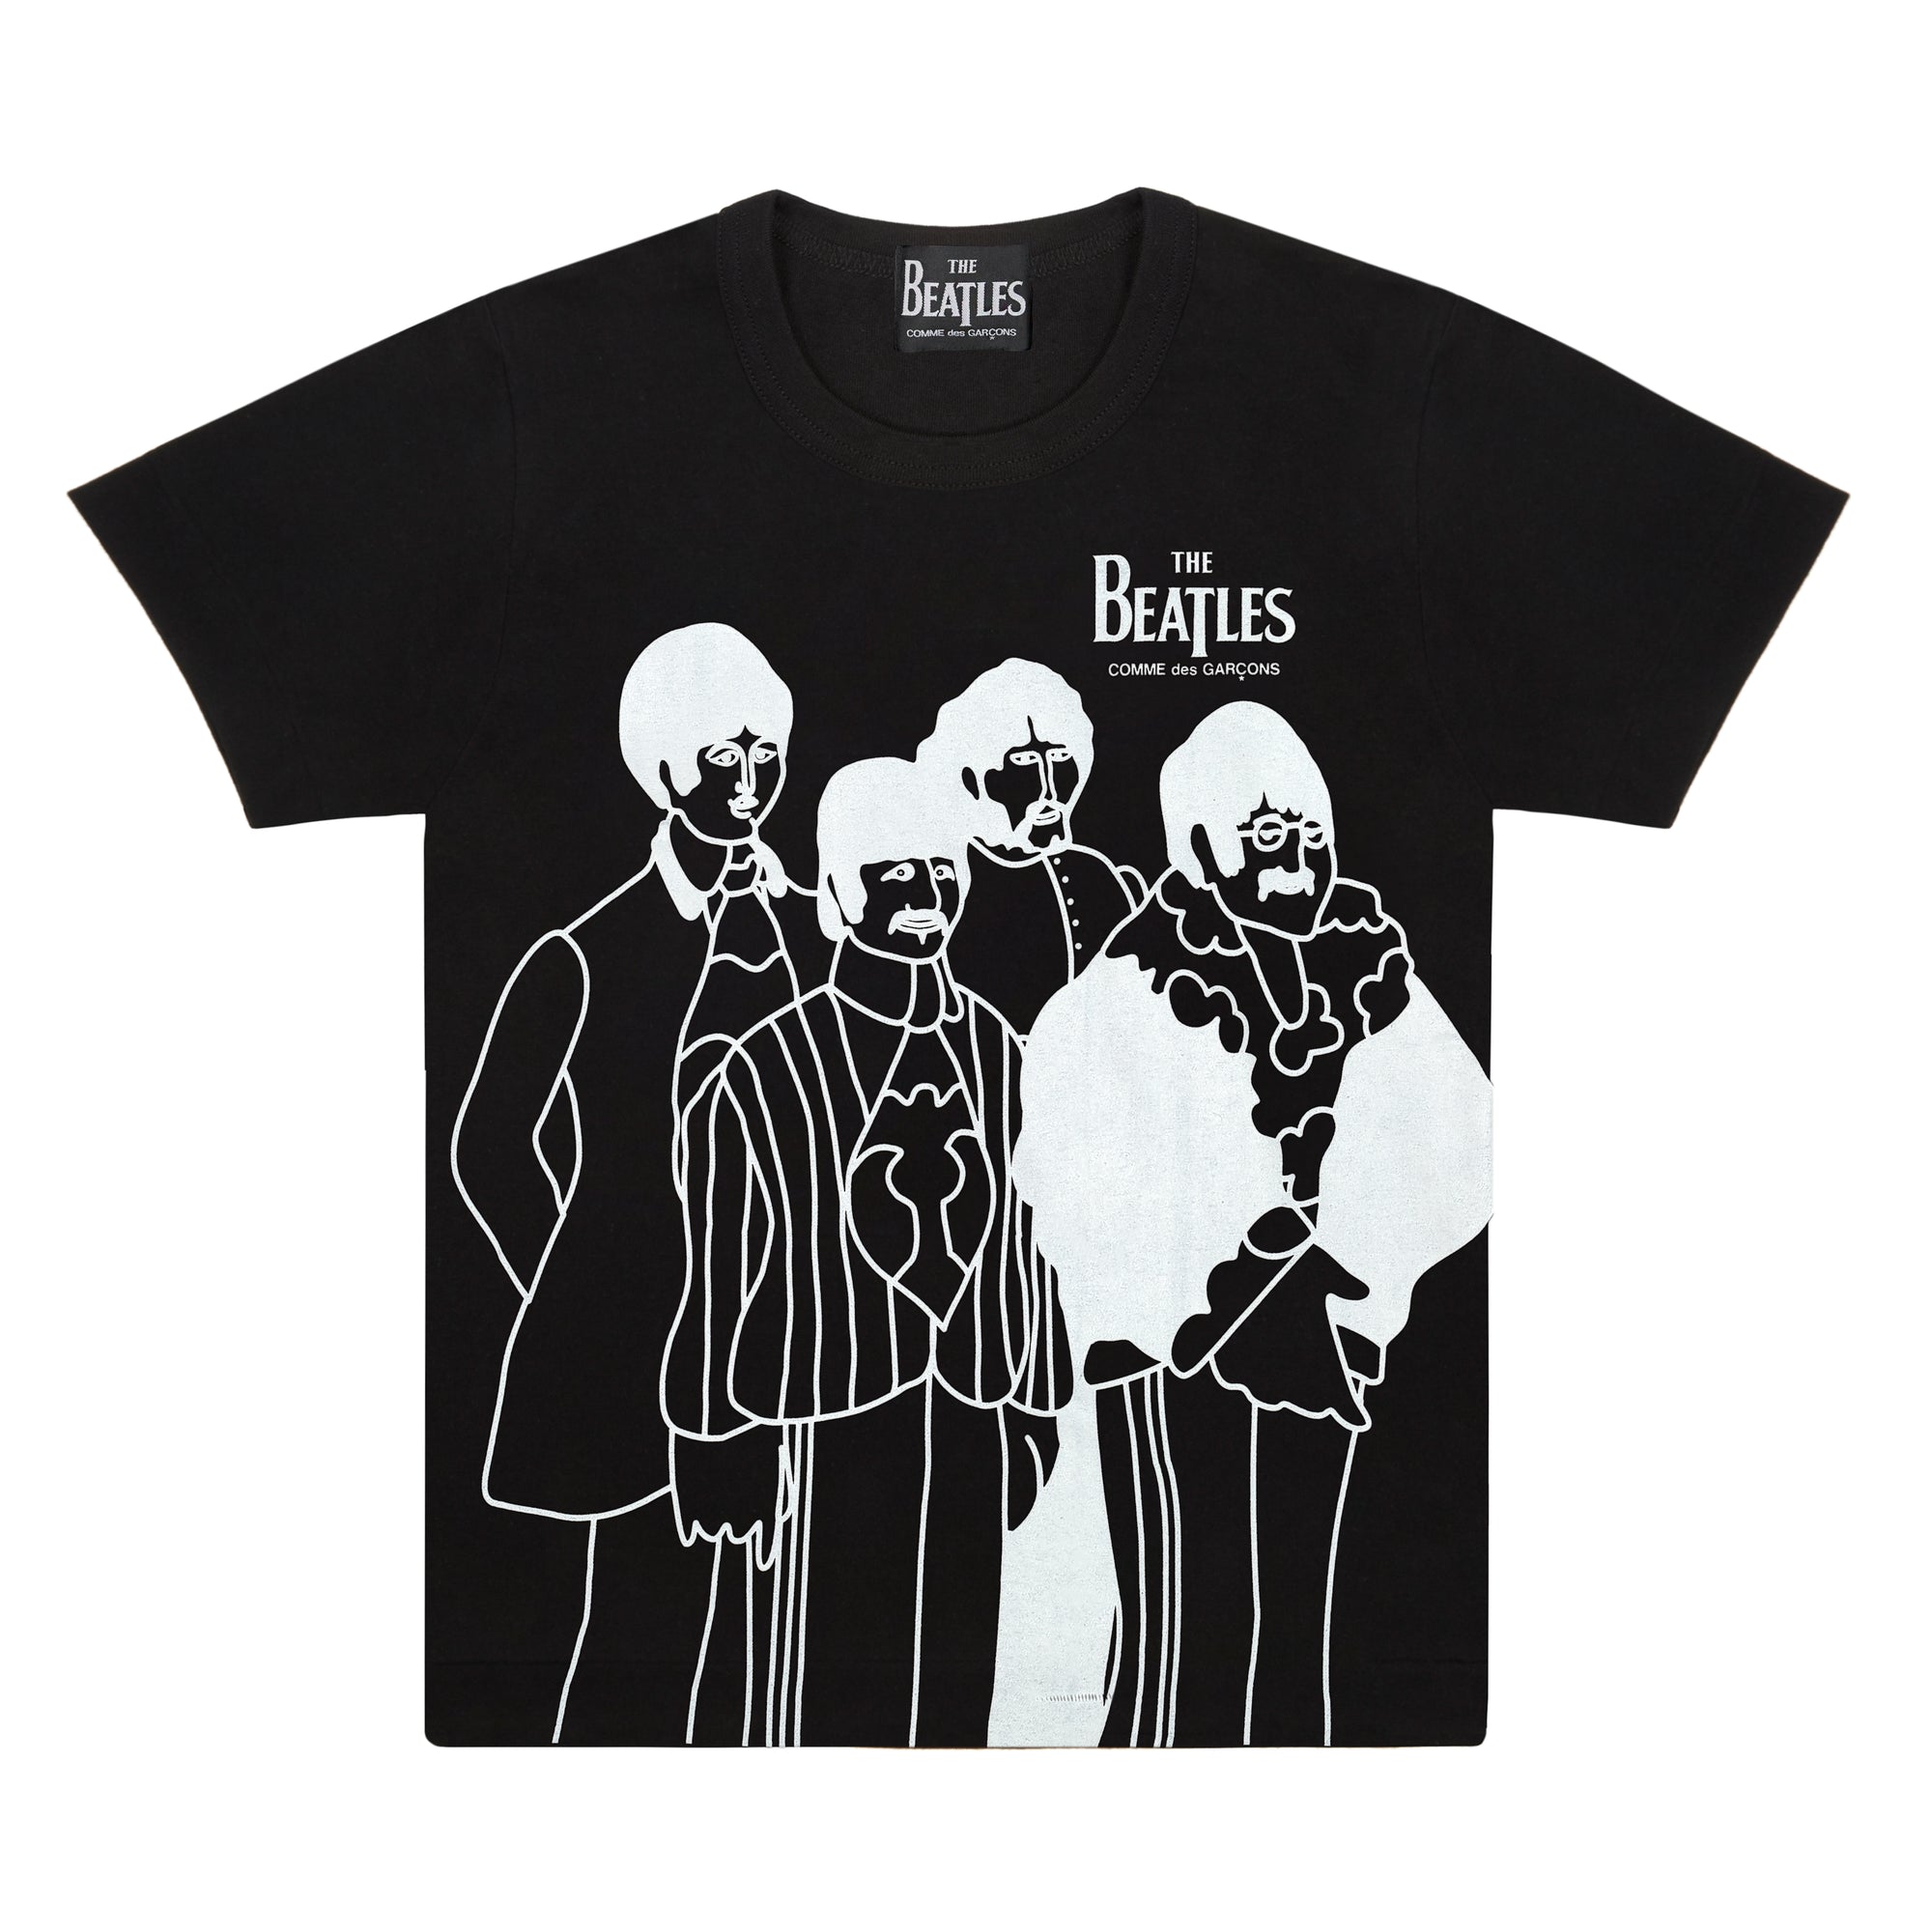 The Beatles CDG - Printed T-Shirt  - (BLACK) view 1